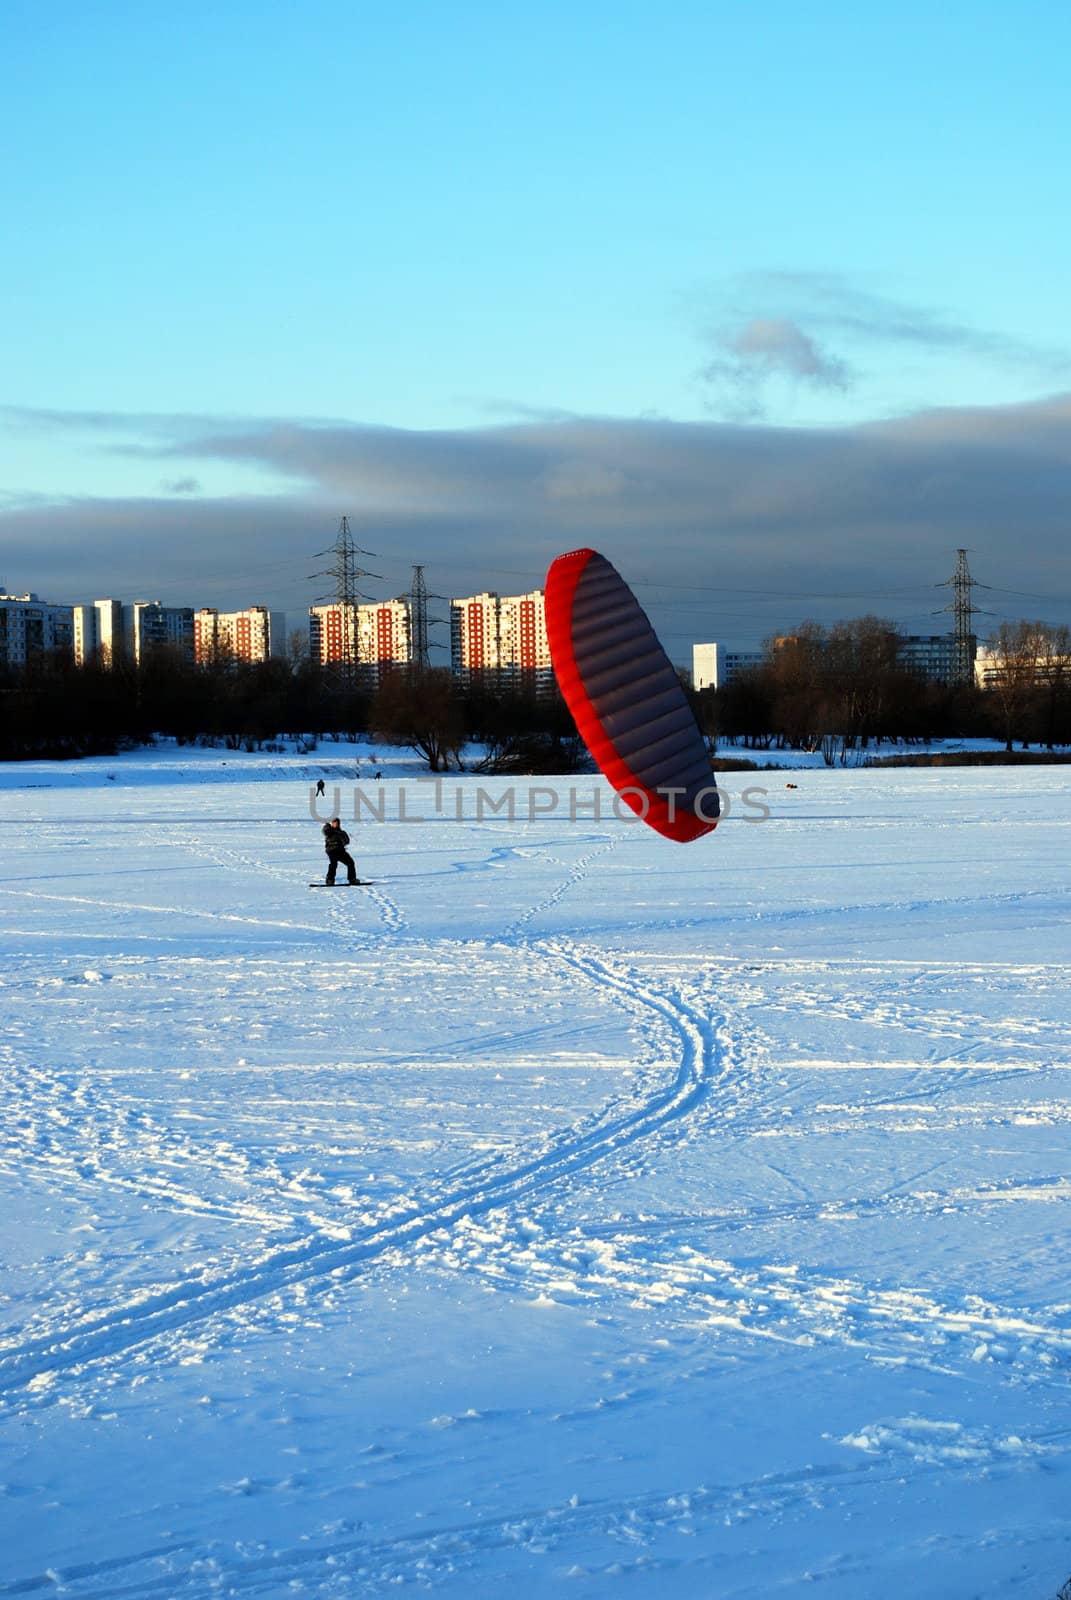 snowkiting on a frozen lake 